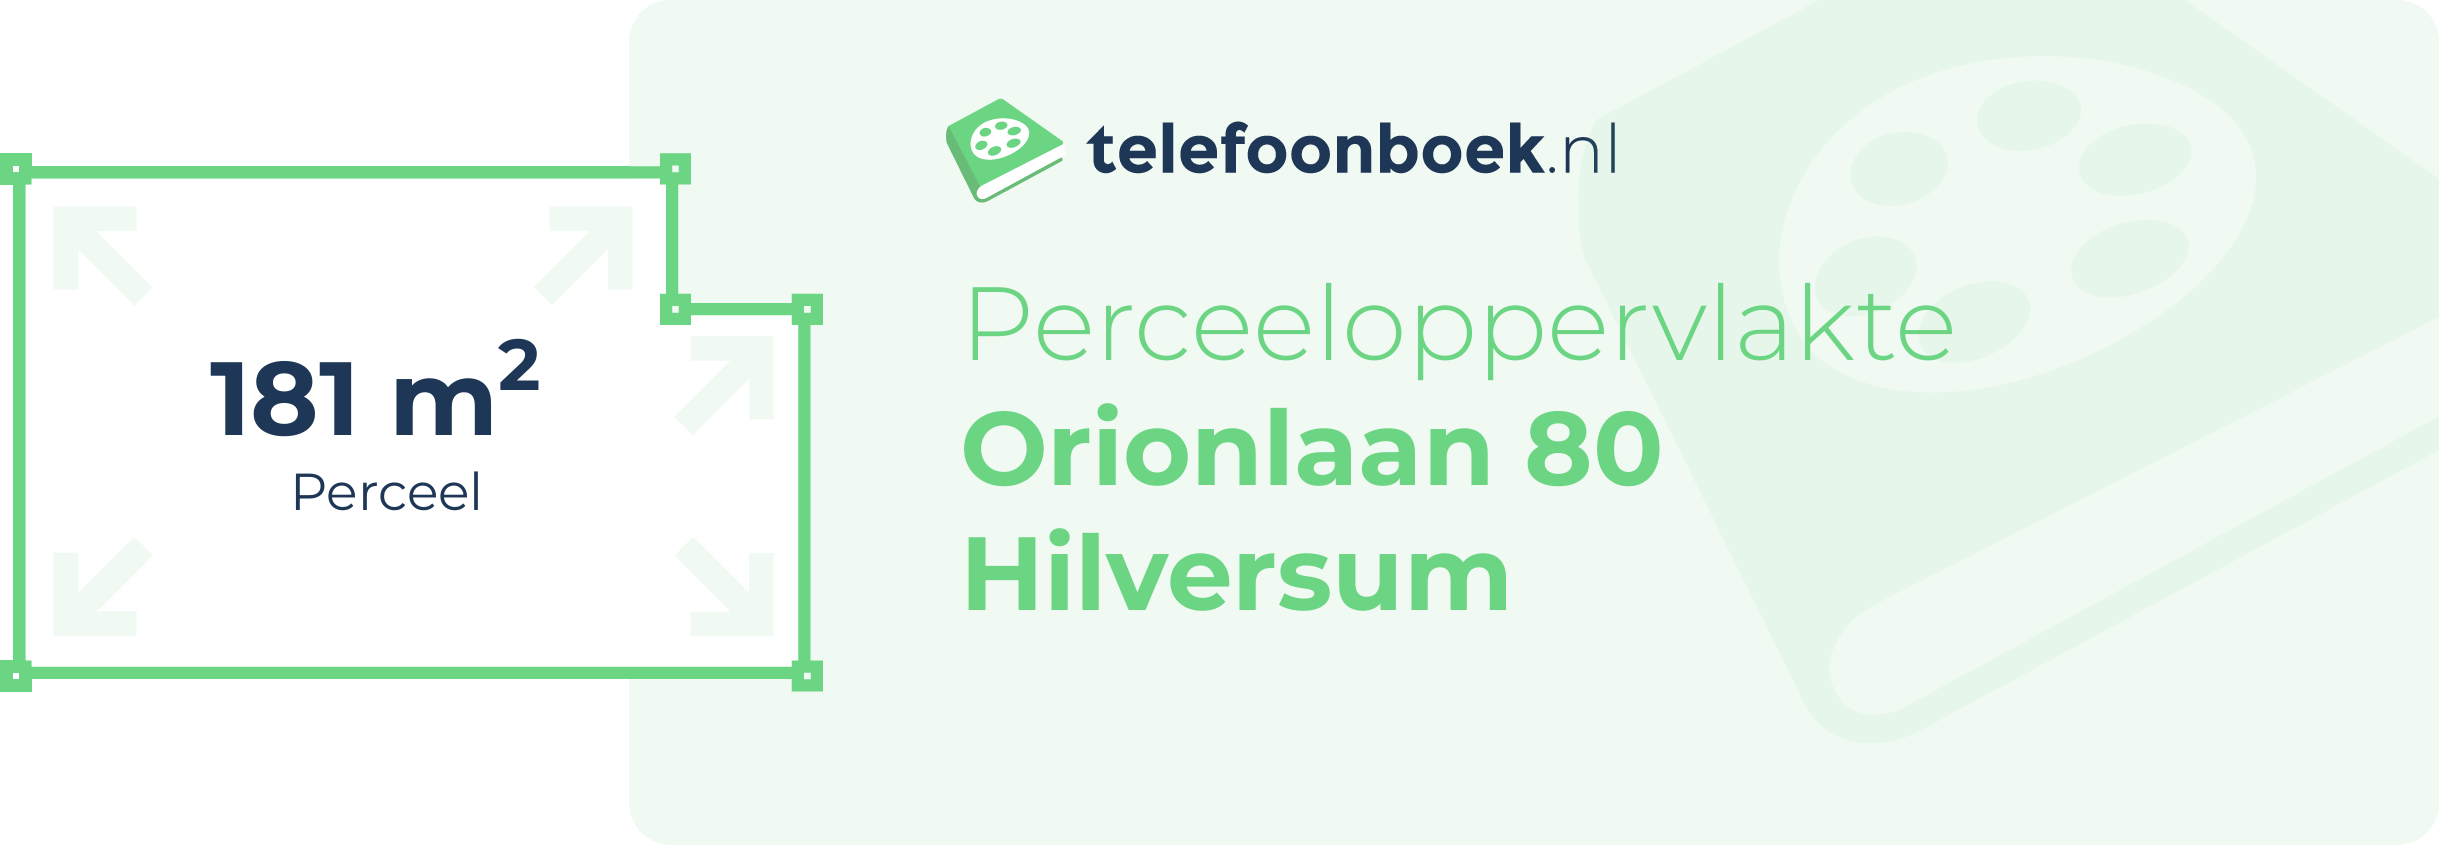 Perceeloppervlakte Orionlaan 80 Hilversum